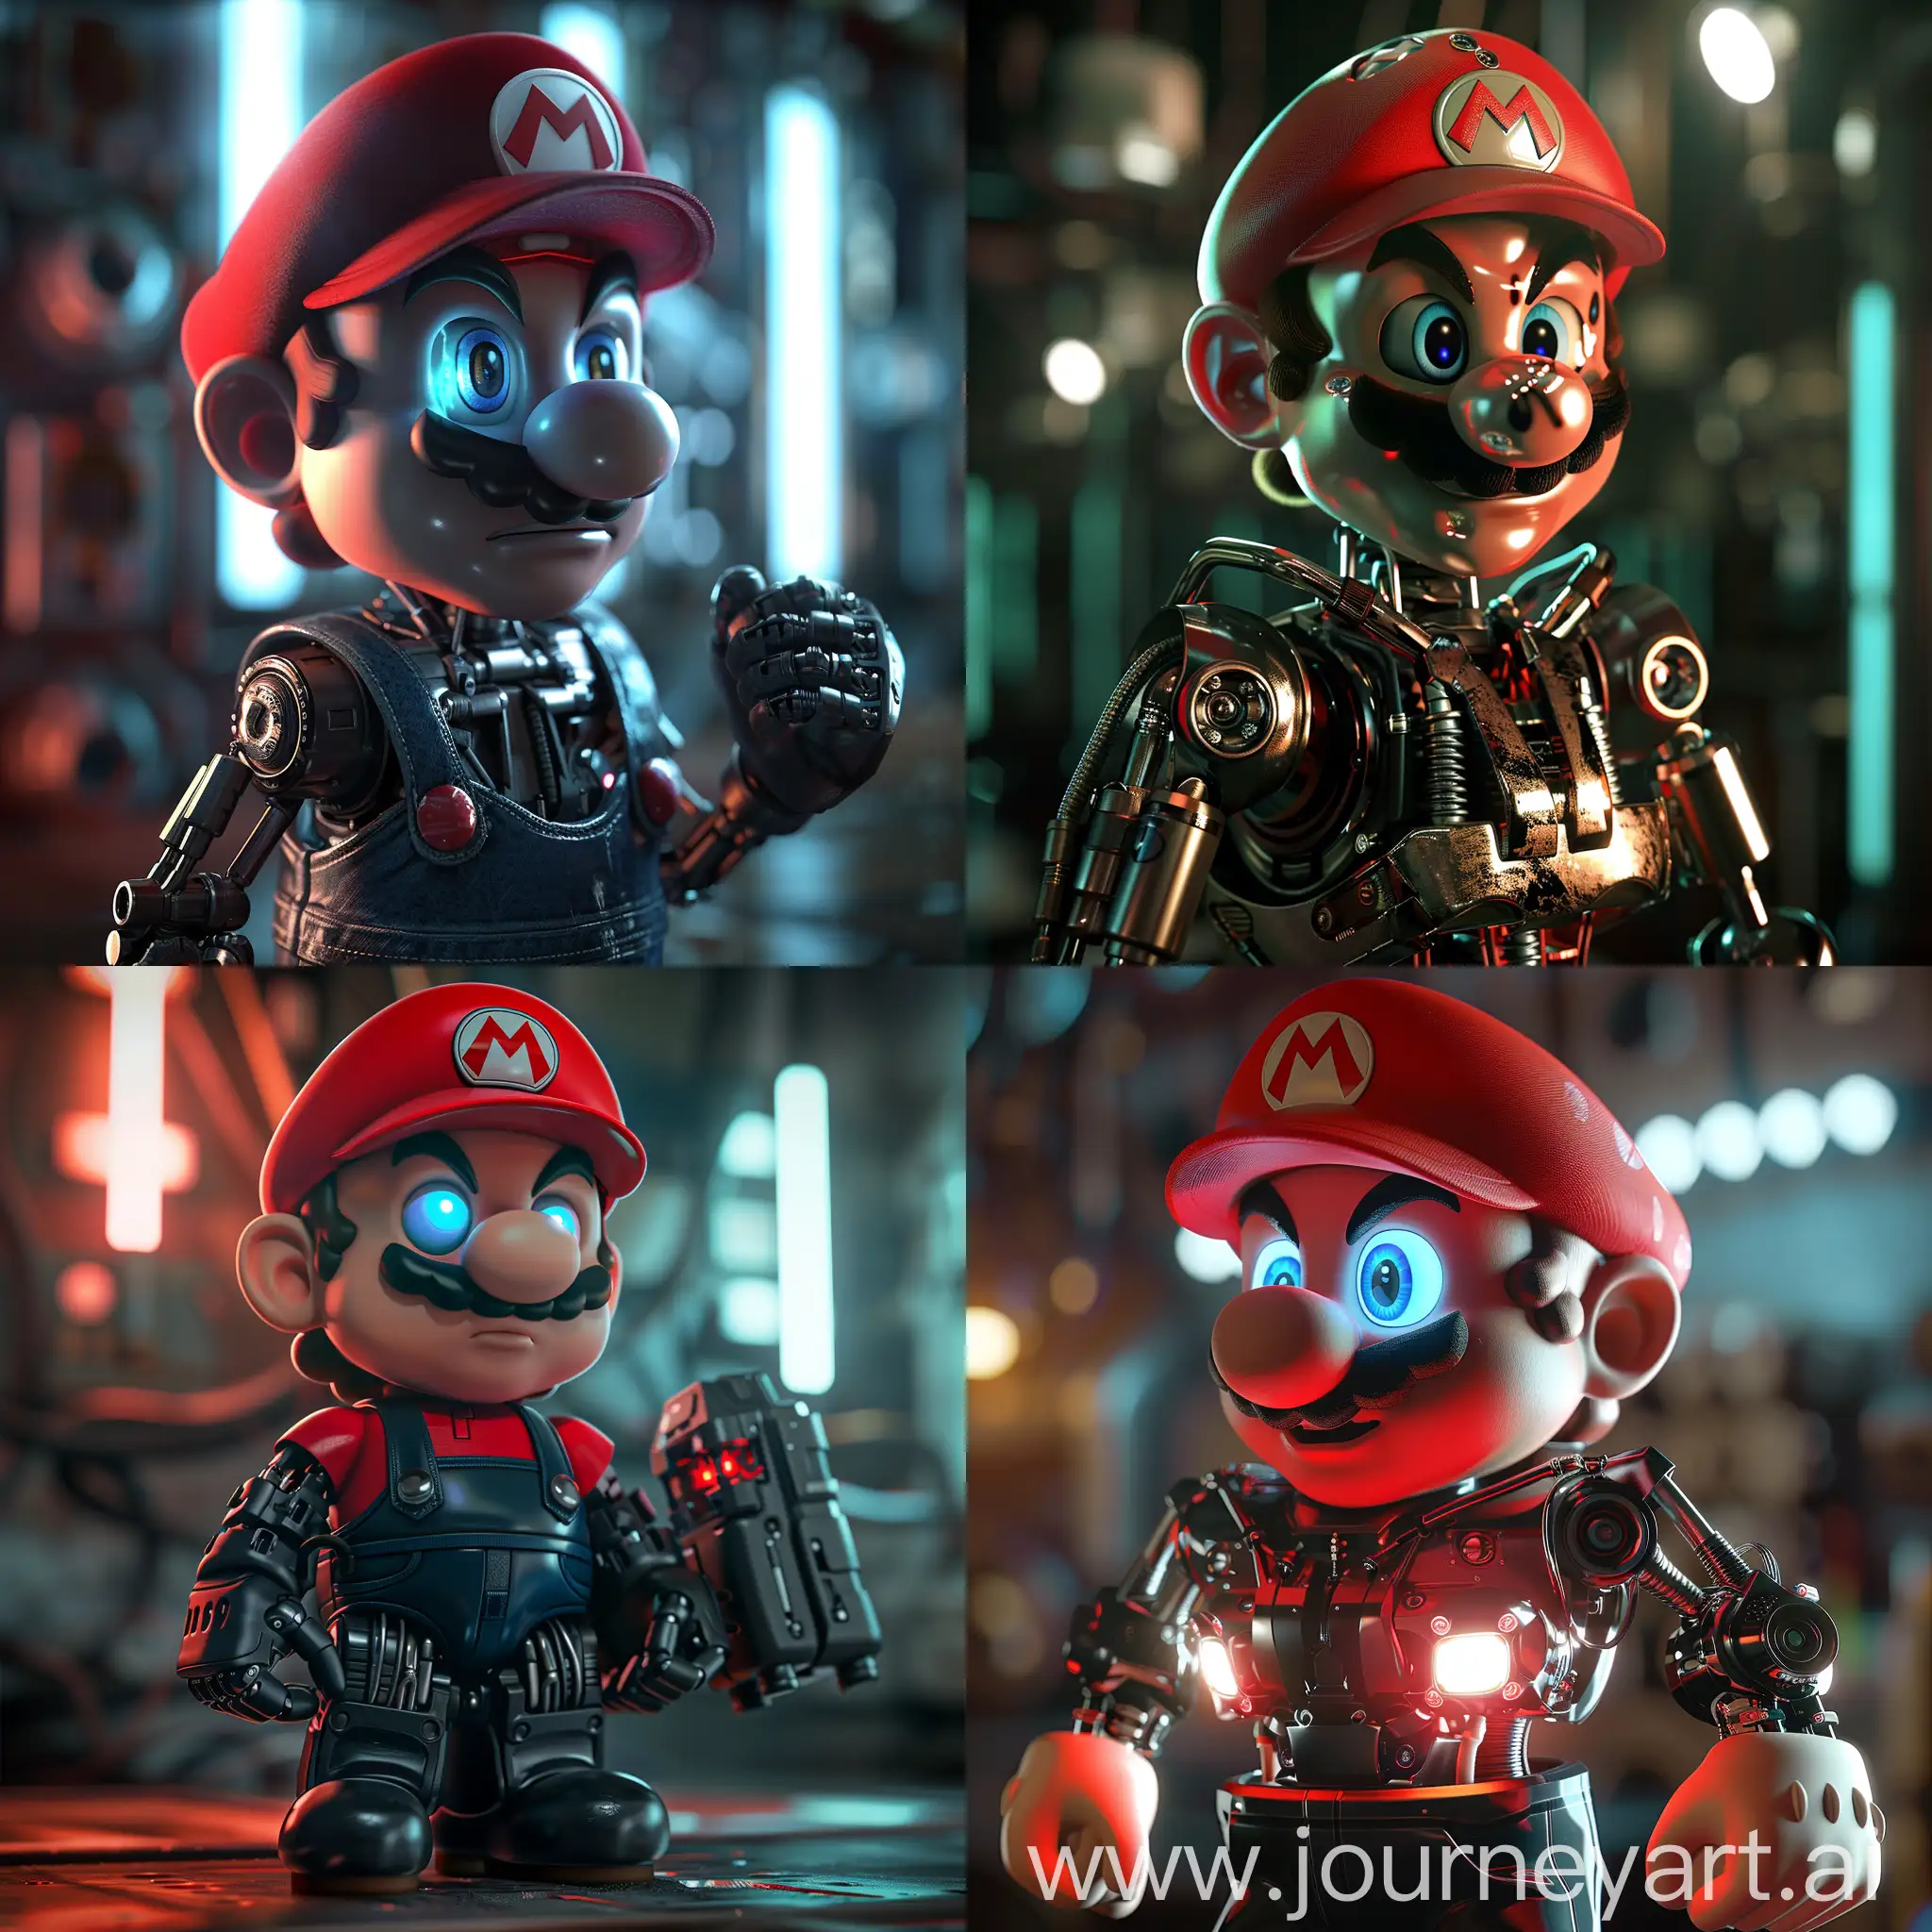 Super-Mario-as-a-T800-Terminator-in-Cinematic-Lighting